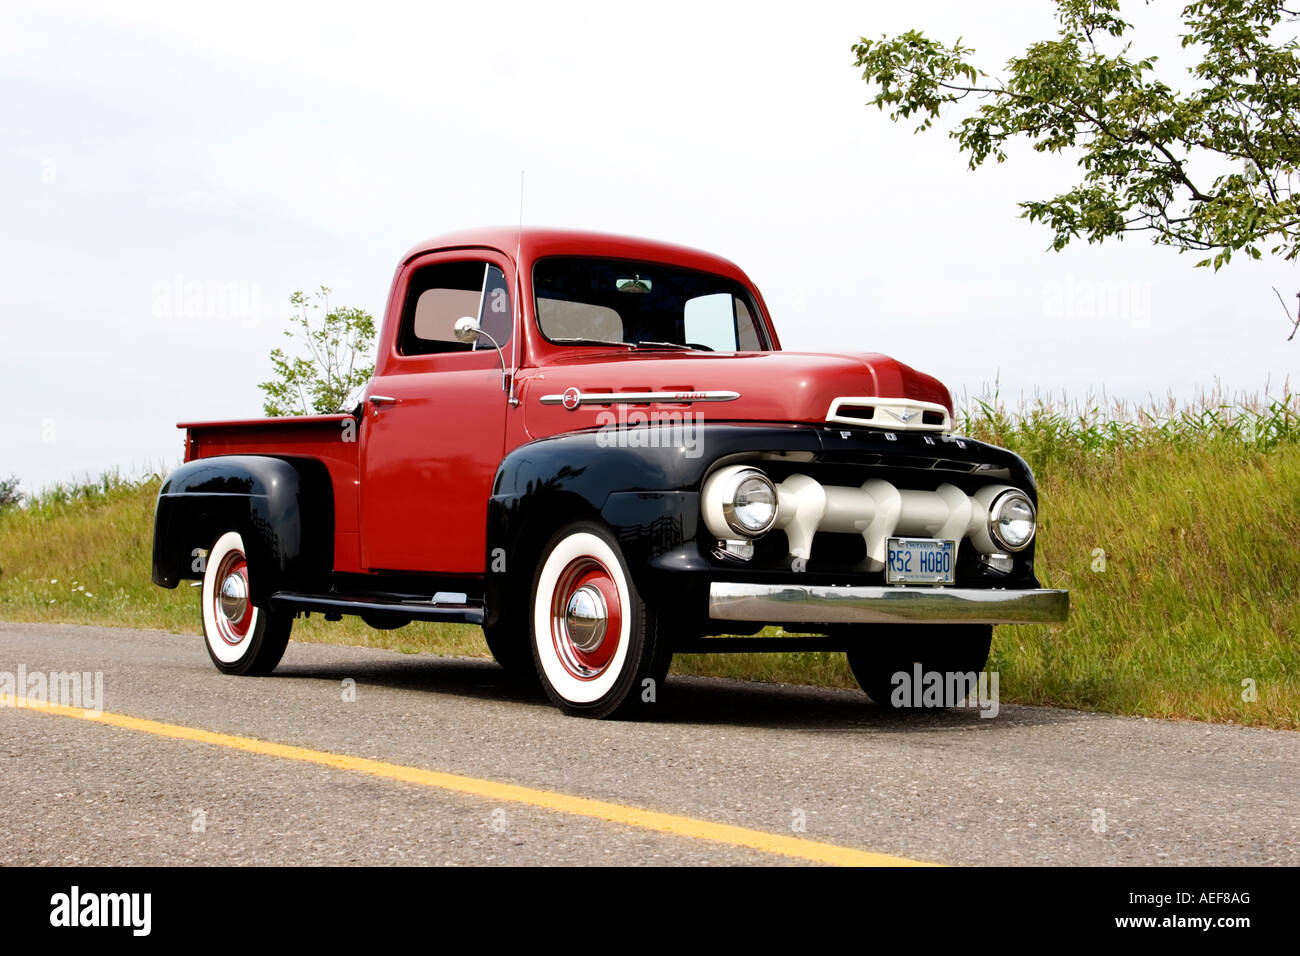 1952-F1-Ford Pick Up Truck Stockfotografie - Alamy